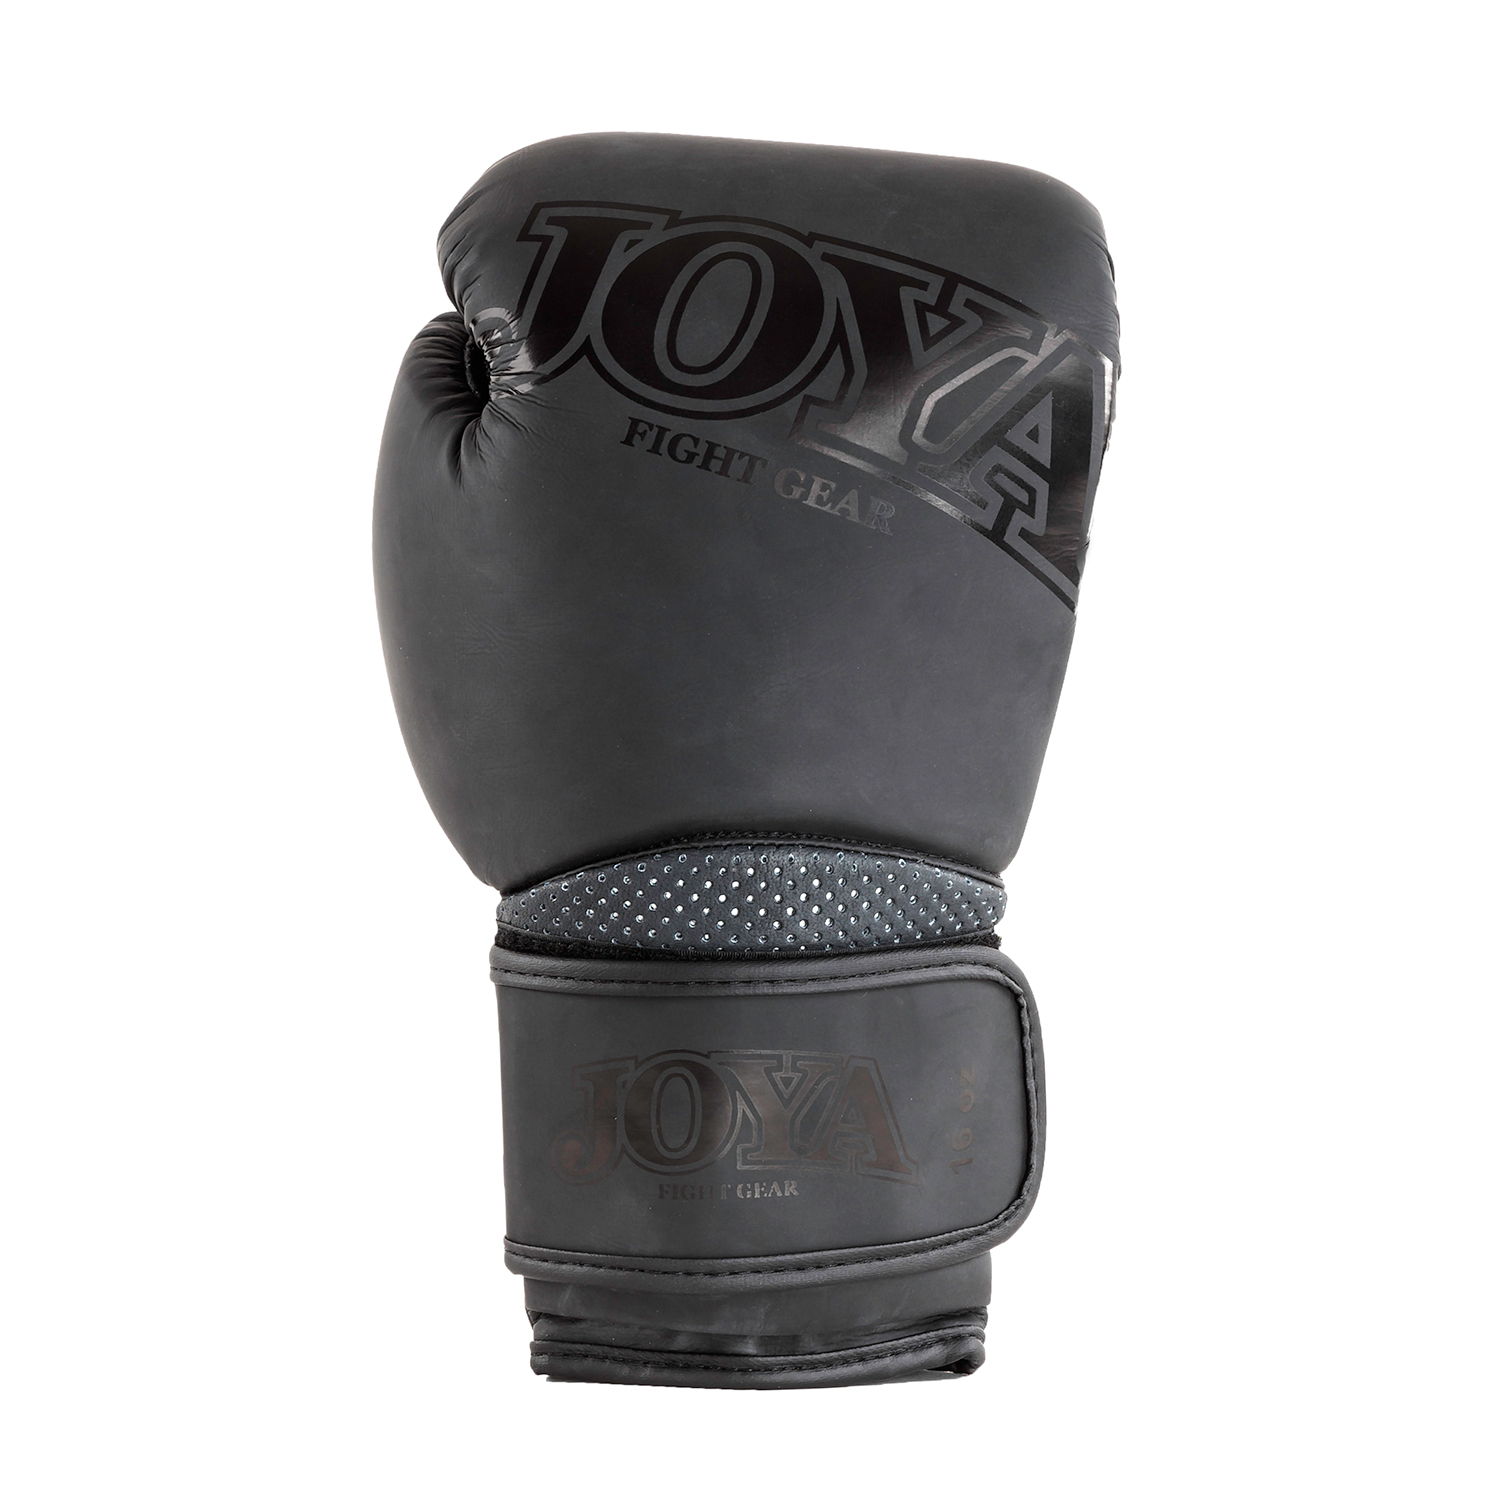 Joya Metal boxing gloves 16 oz